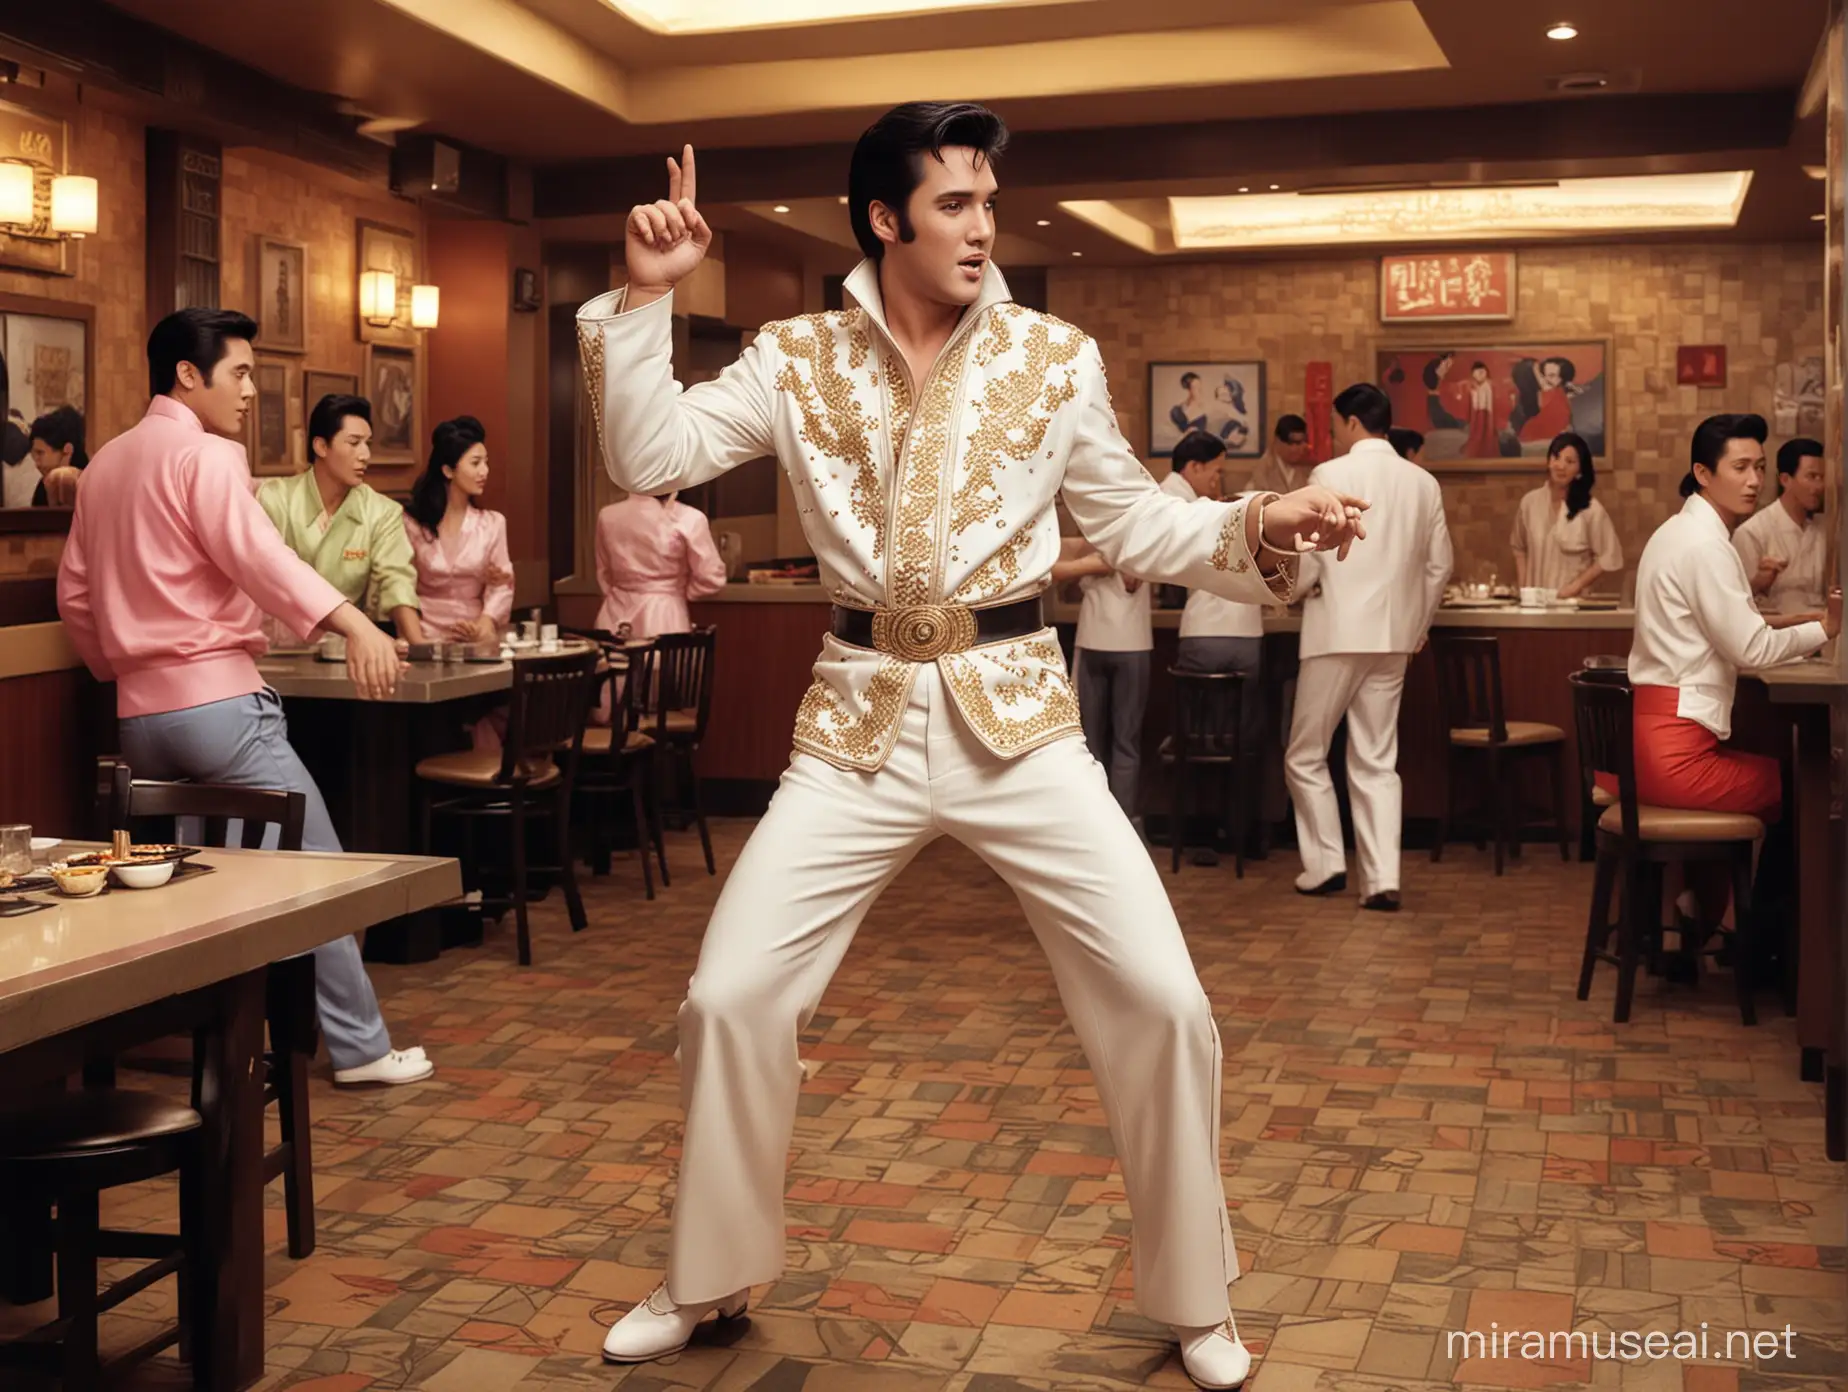 Elvis Presley Impersonator Dancing in Vibrant Korean BBQ Casino Atmosphere